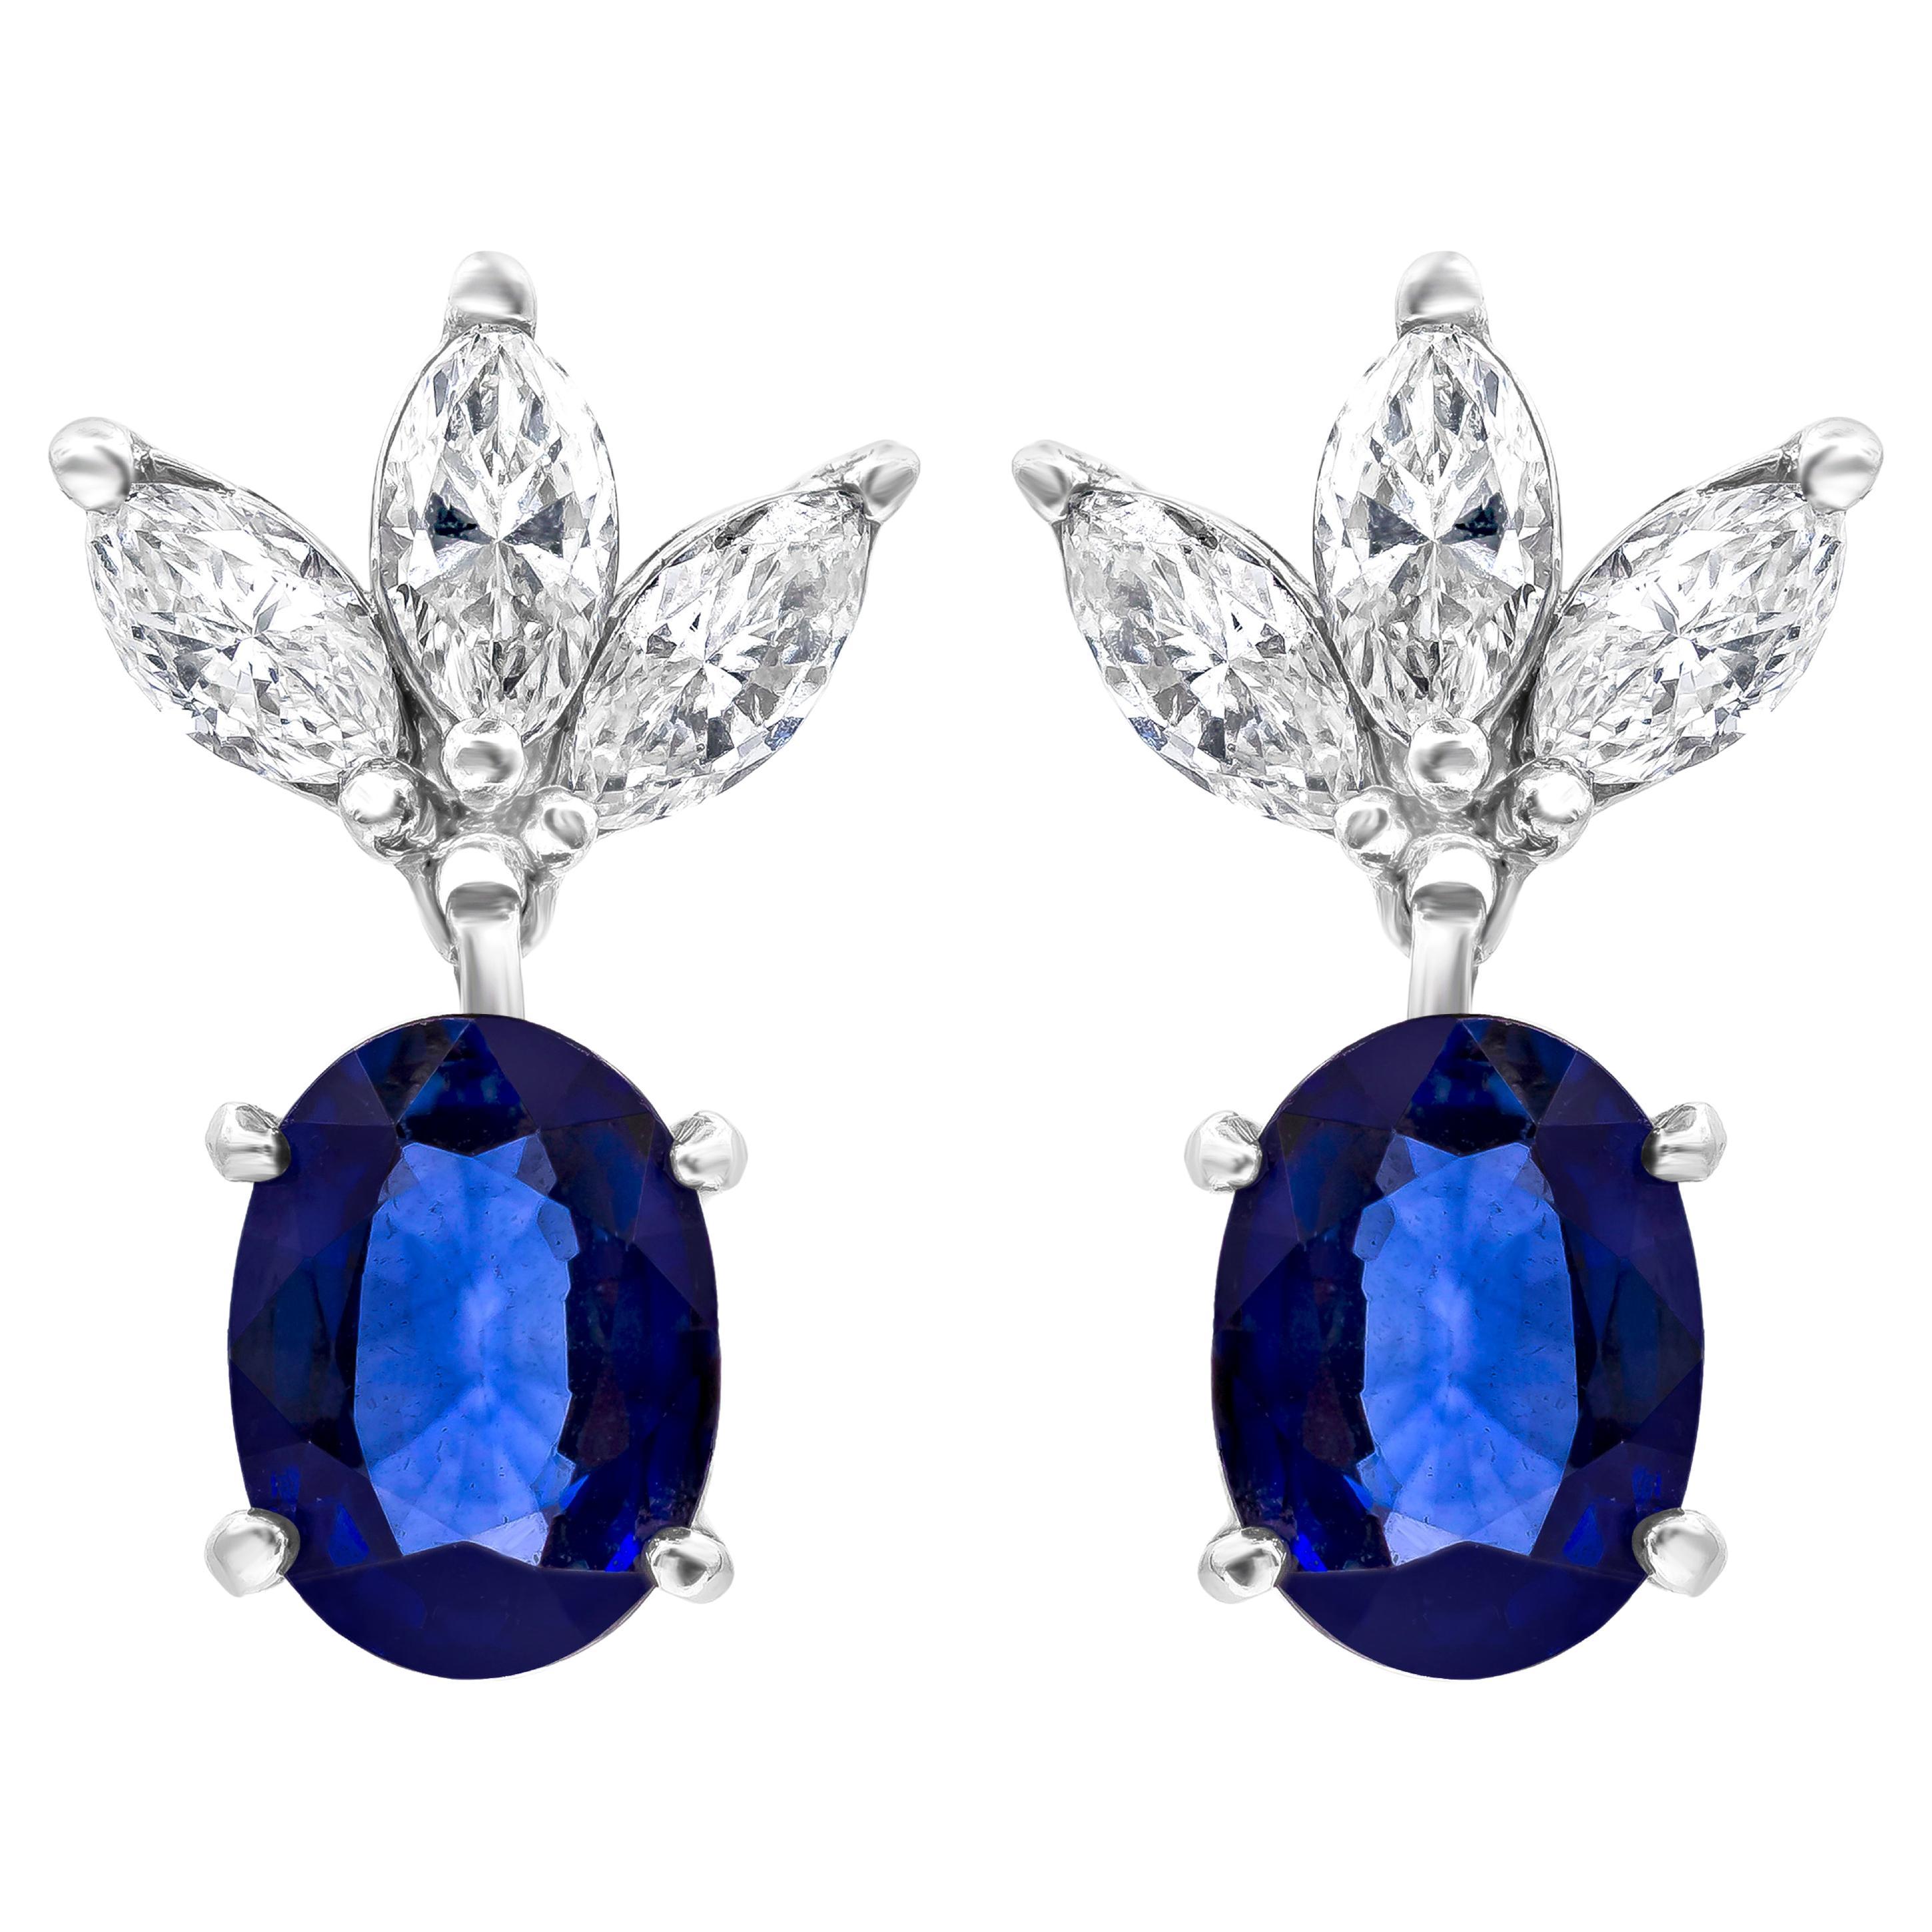 4.21 Carats Total Oval Cut Blue Sapphire & Diamond Dangle Earrings